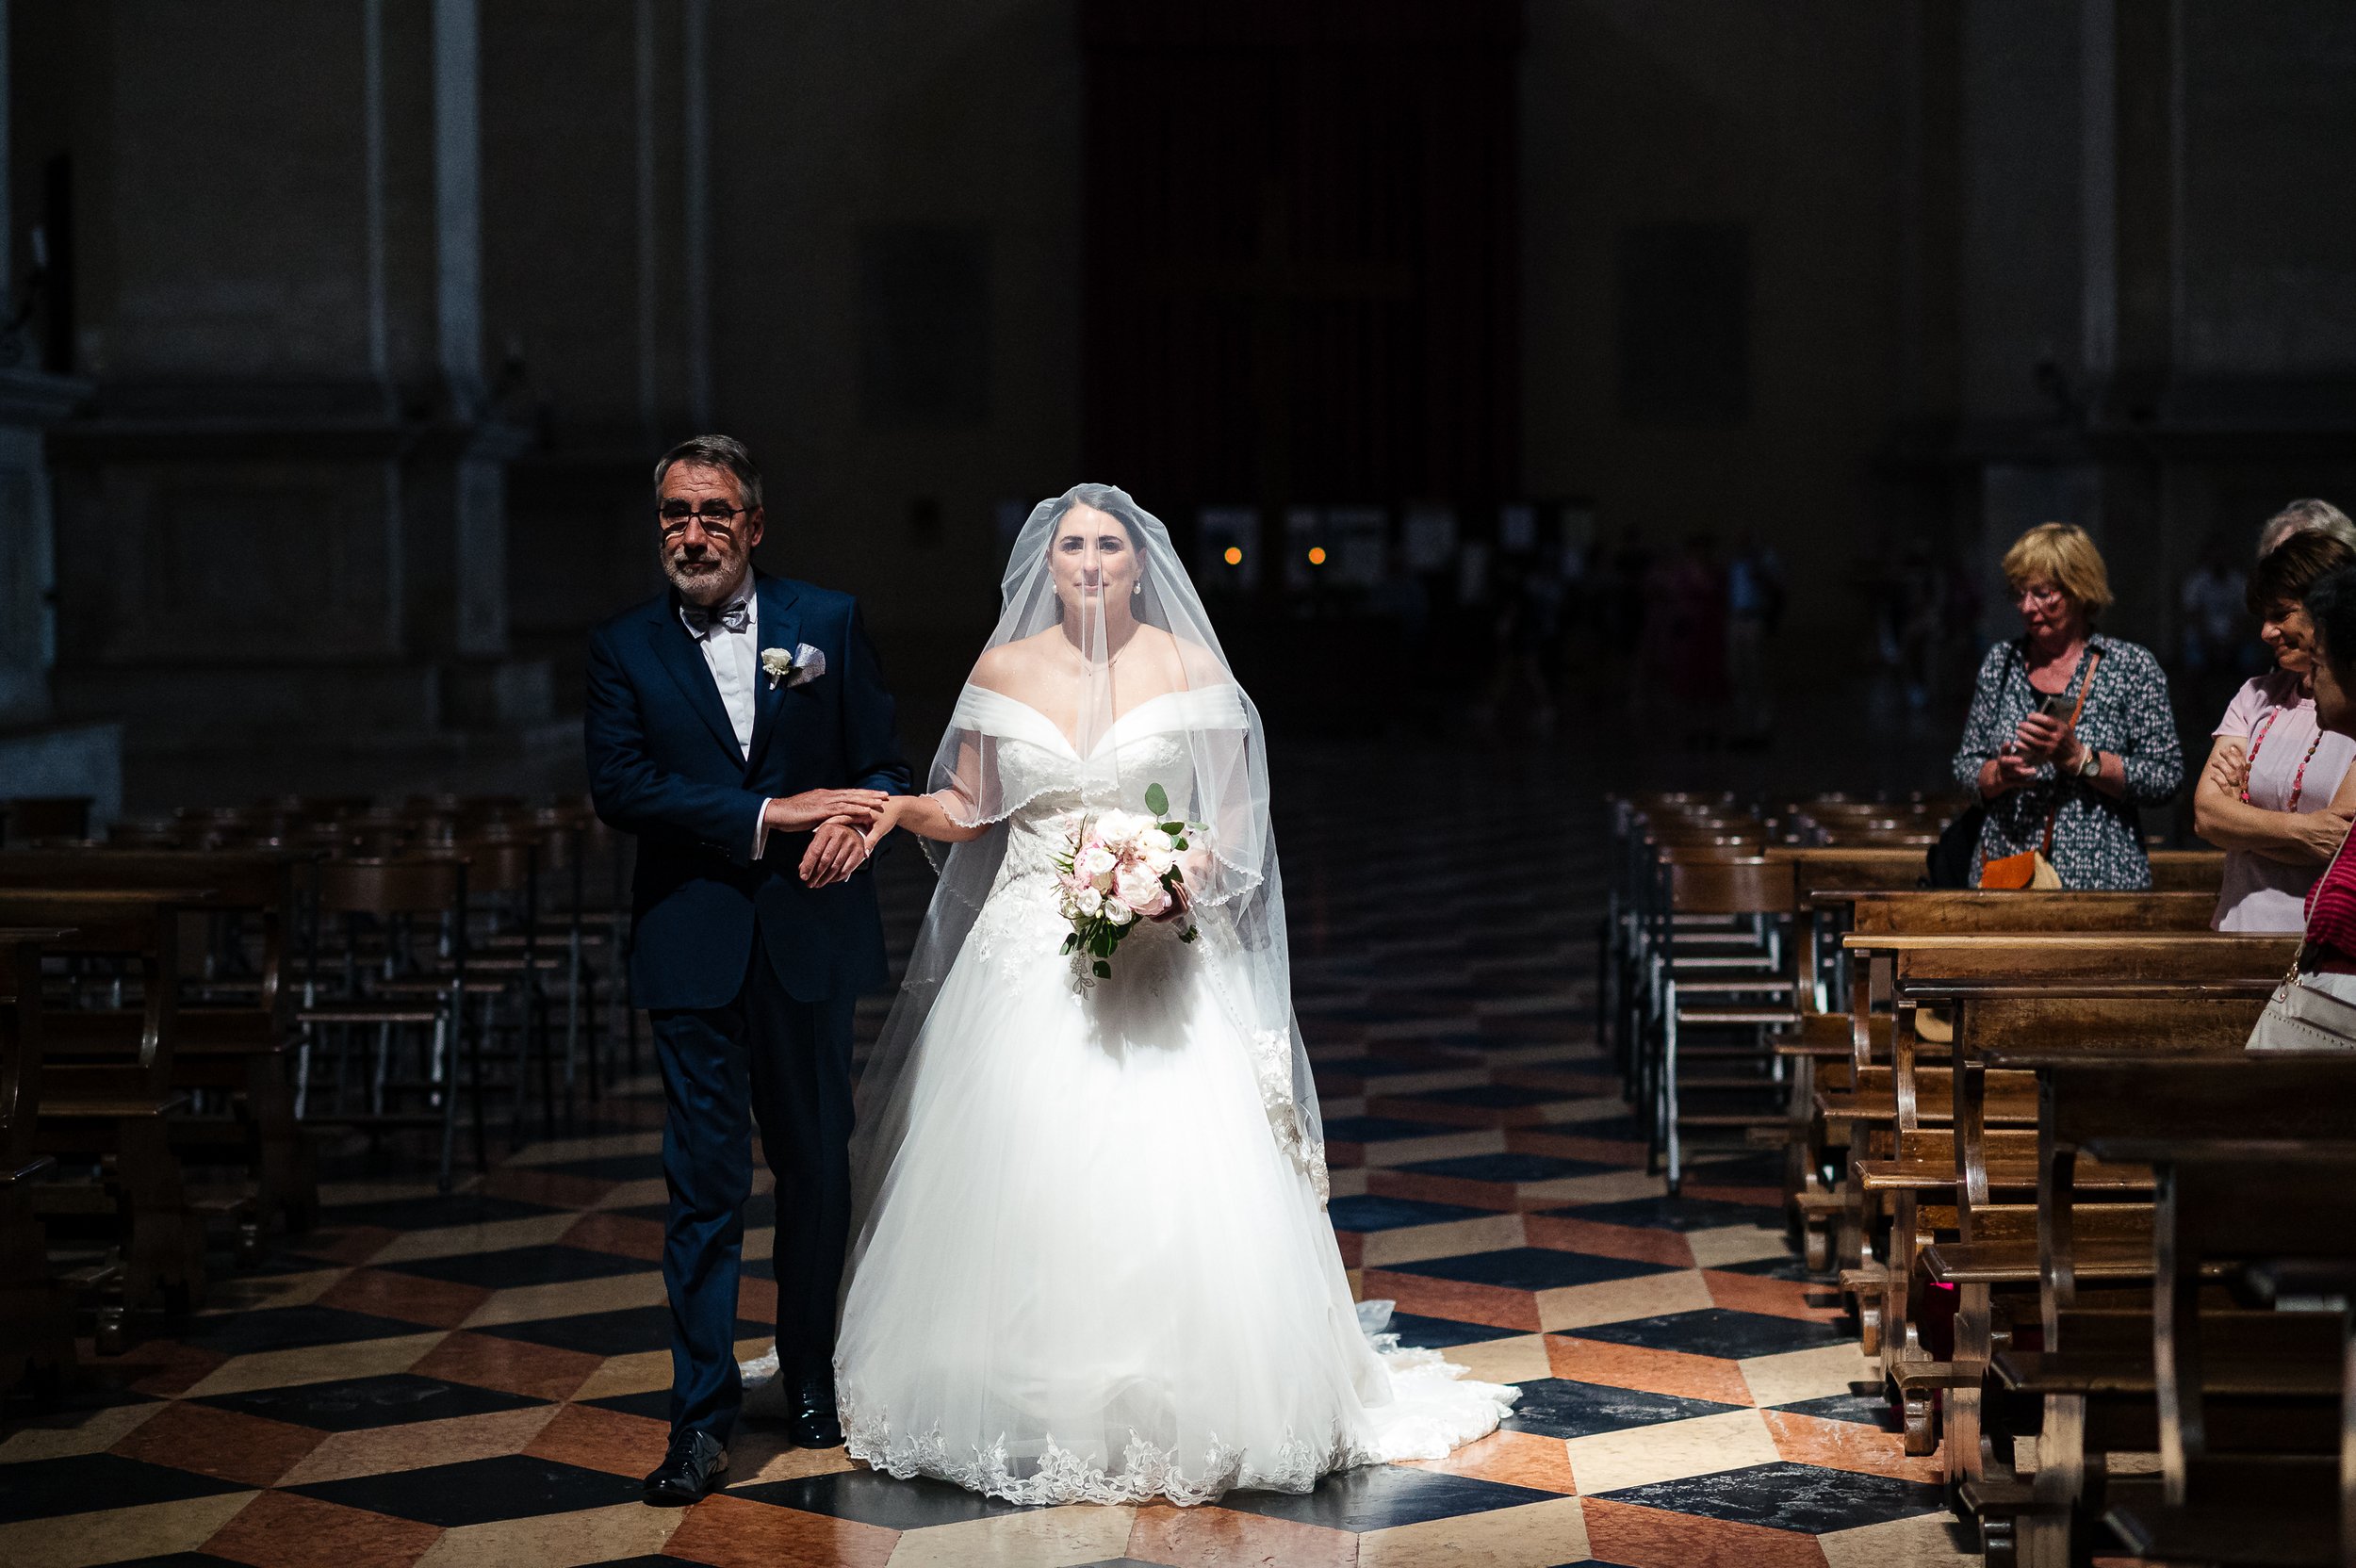 Matrimonio-dominio-bagnoli-Villa-Widman-Borletti-0030.jpg